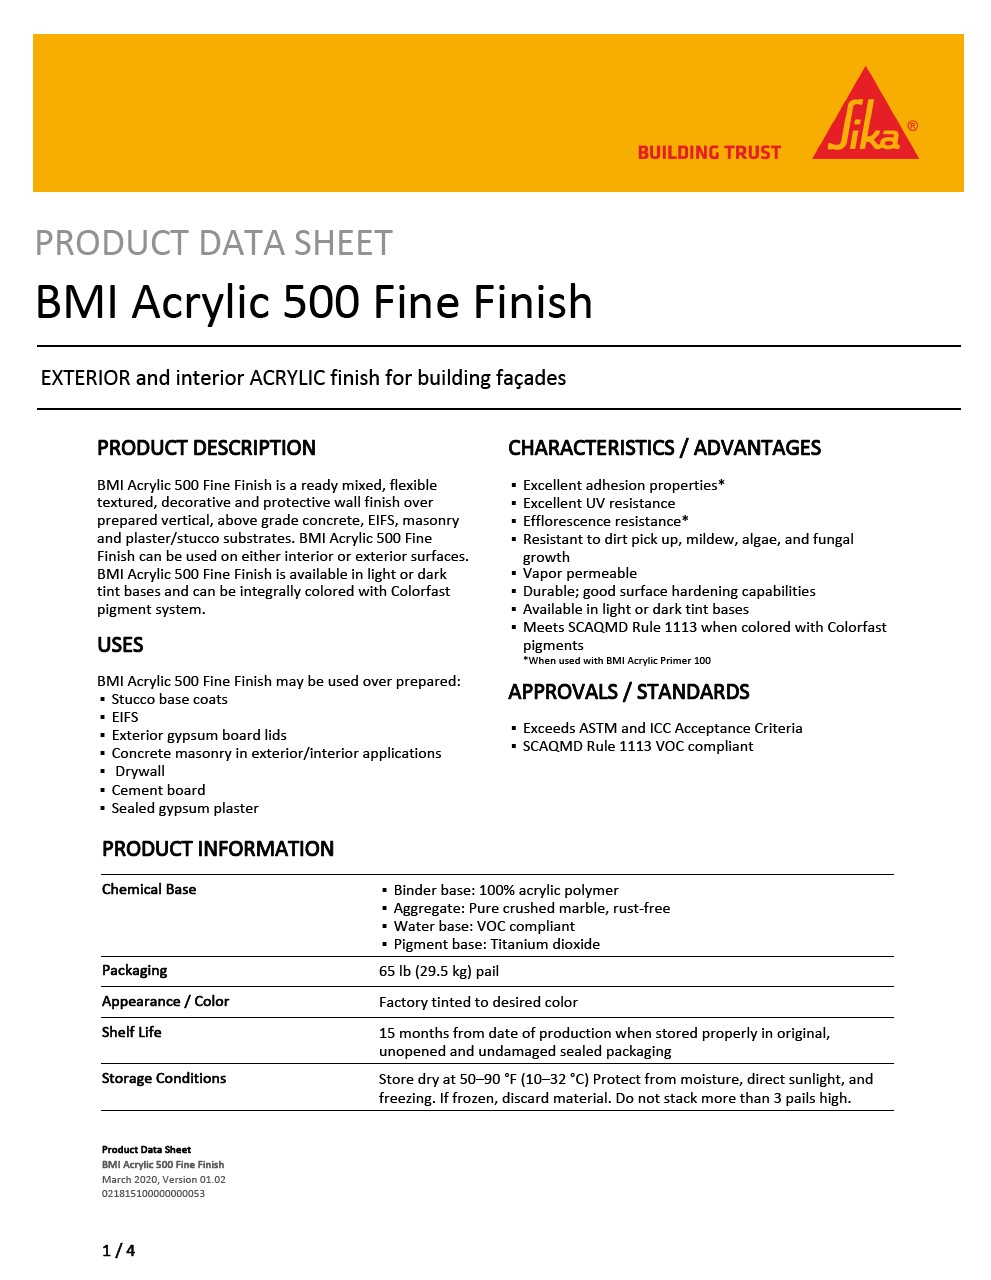 BMI Acrylic 500 Fine Finish